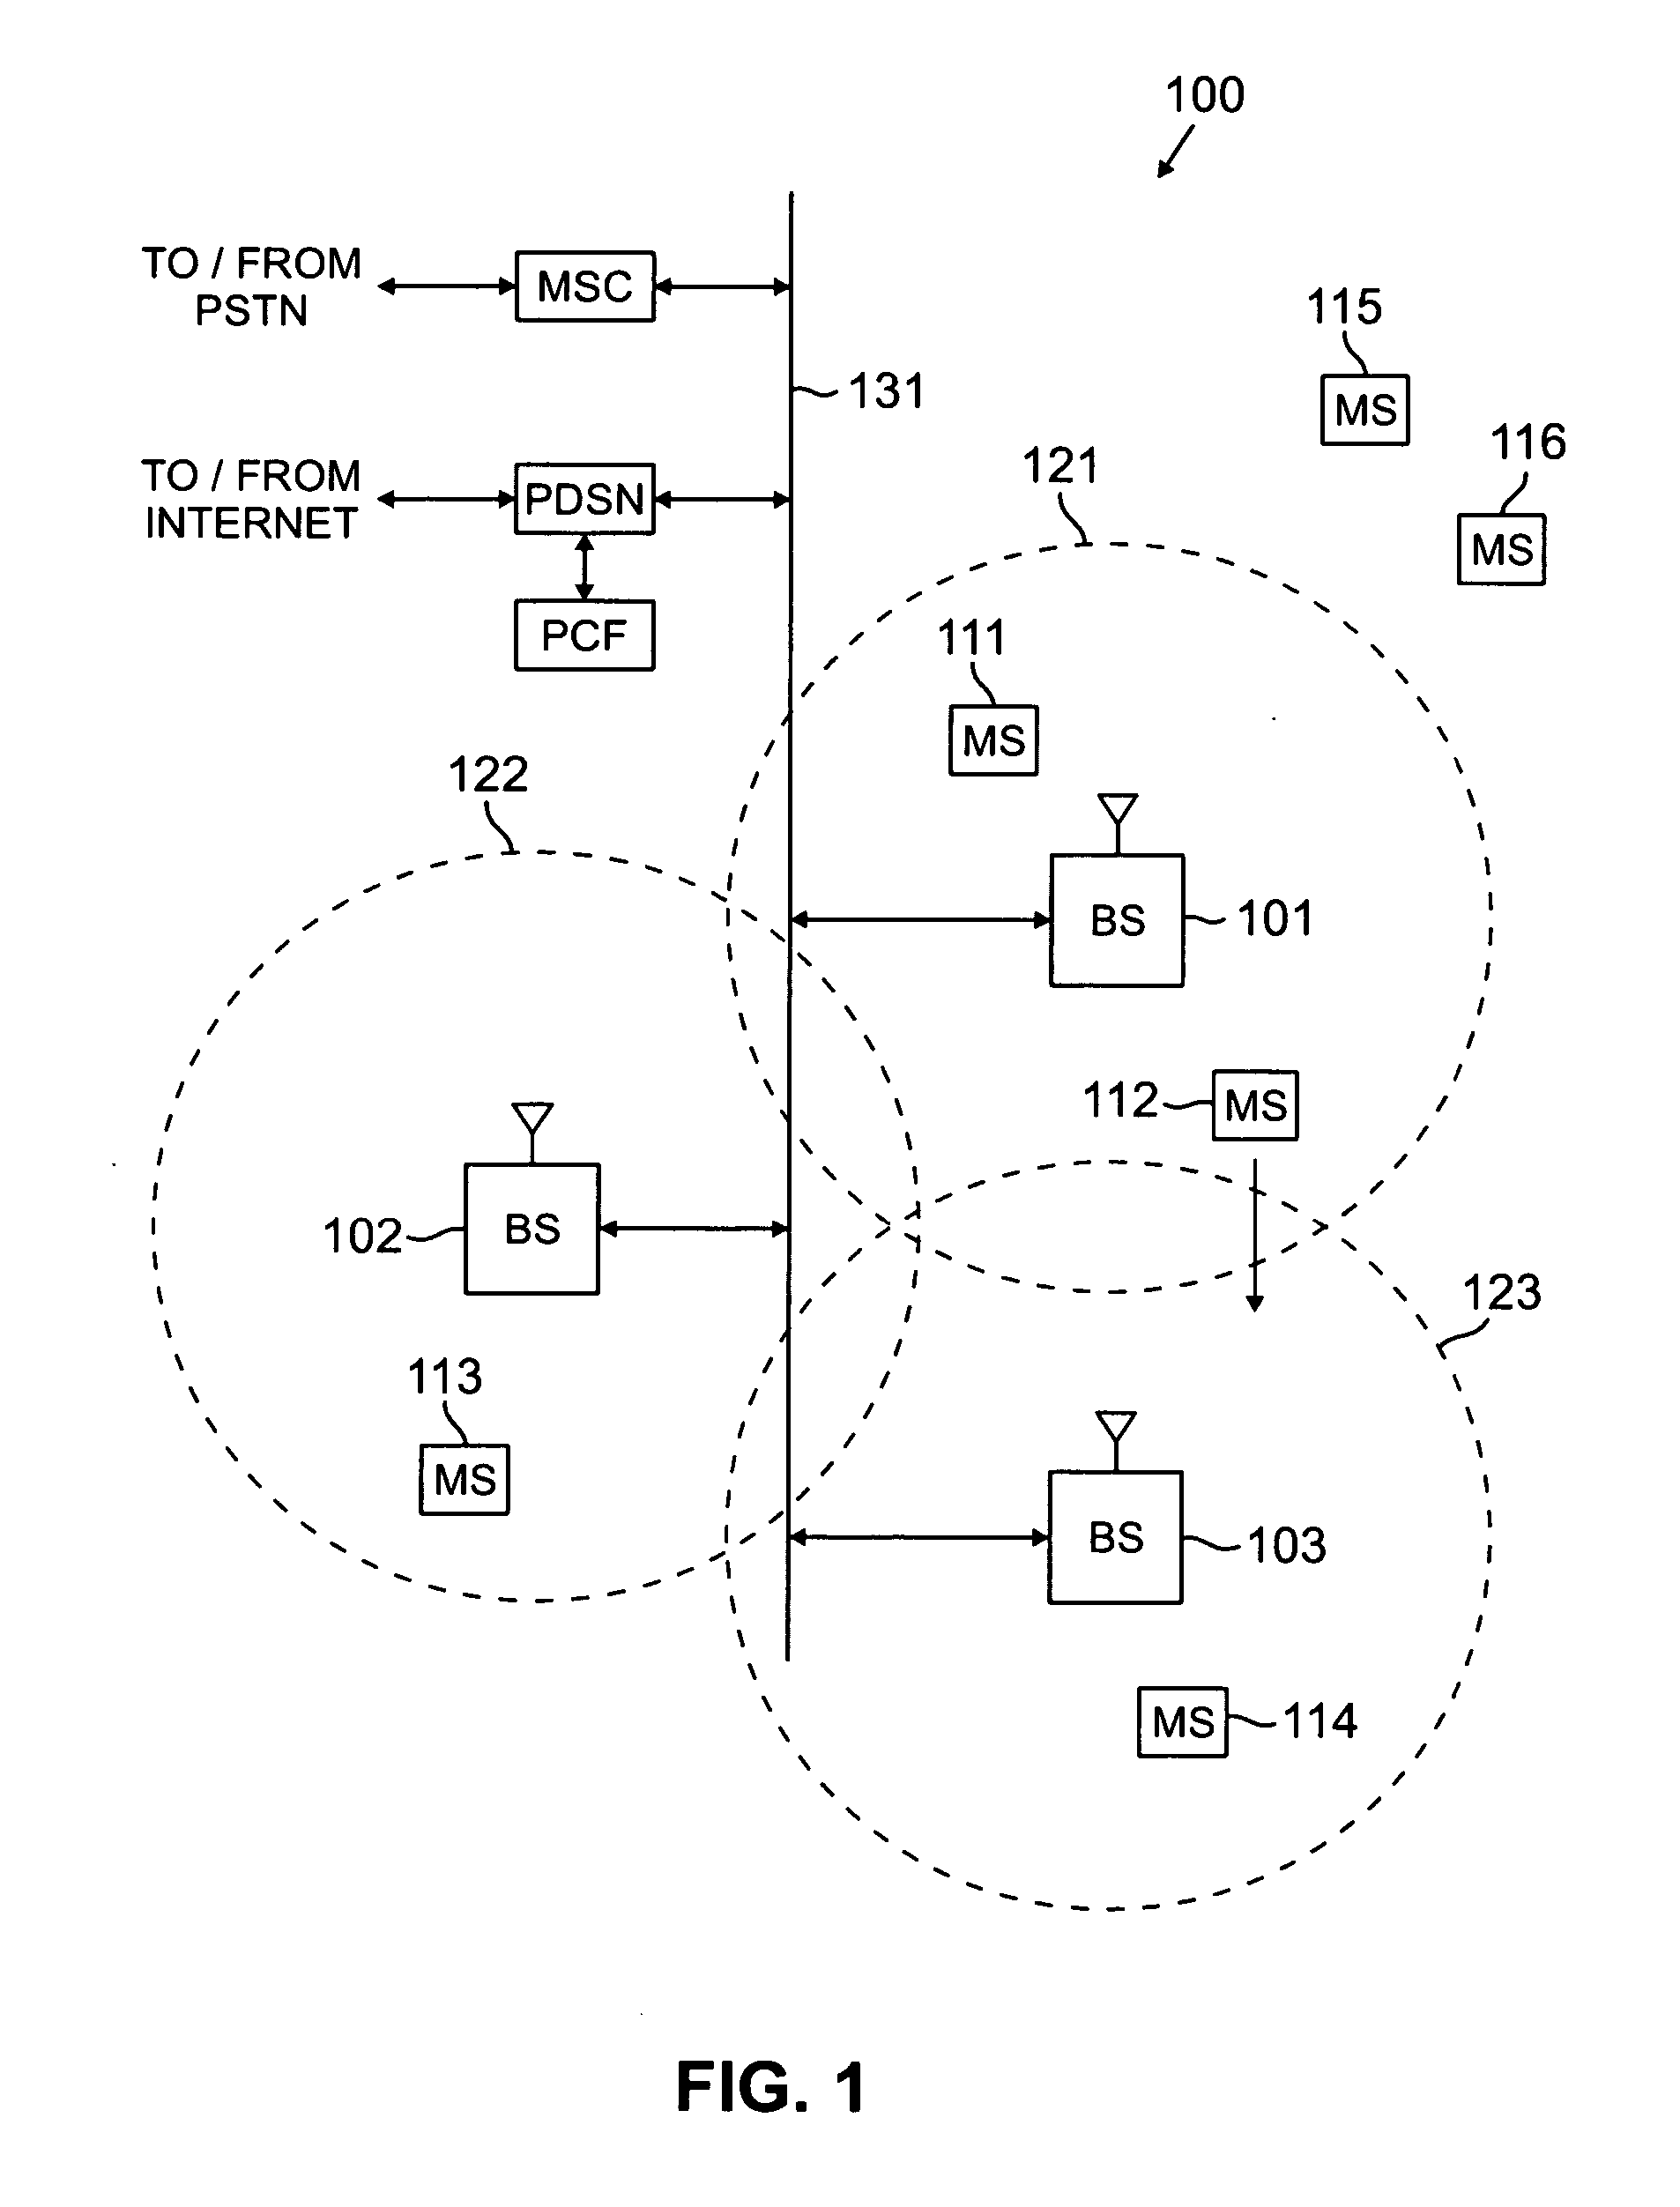 Auto adaptive technique to provide adequate coverage and mitigate RF interference